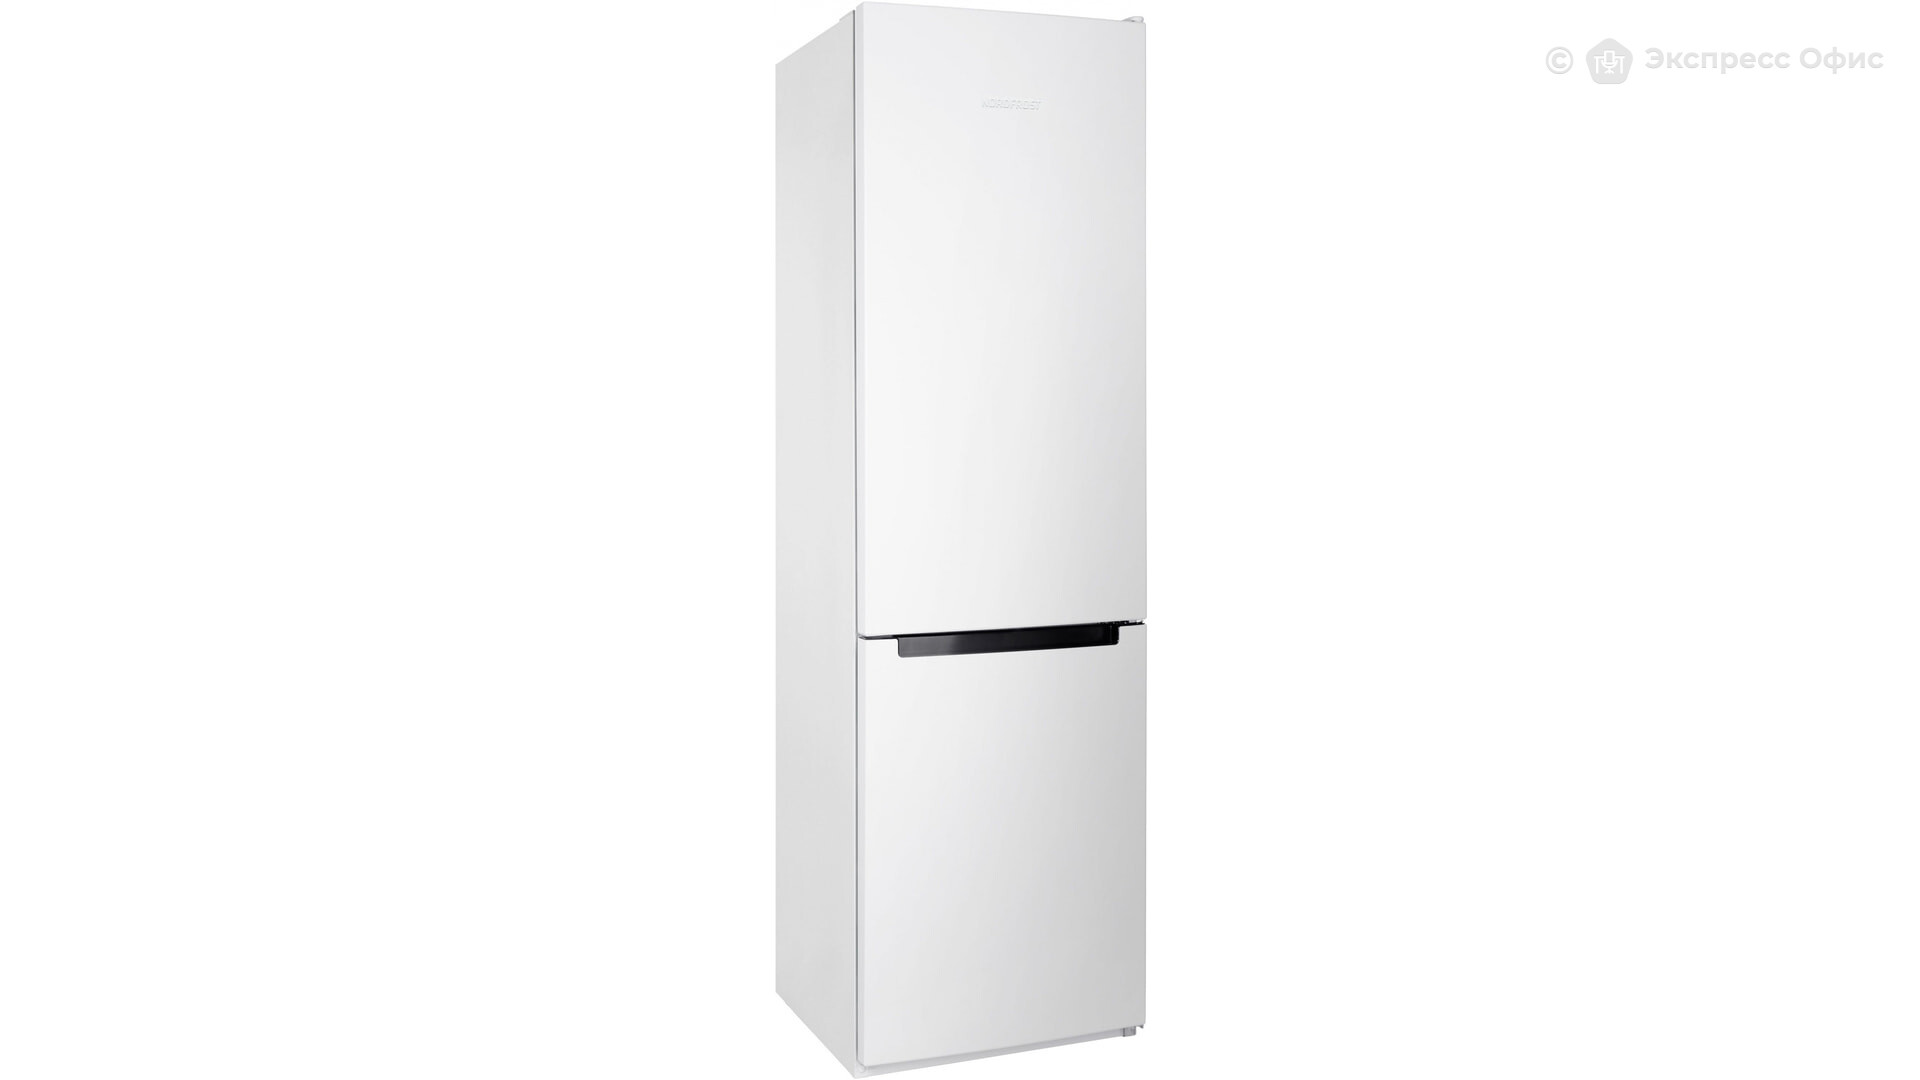 Холодильник индезит 4180 w. Холодильник Индезит DS 4180 W.